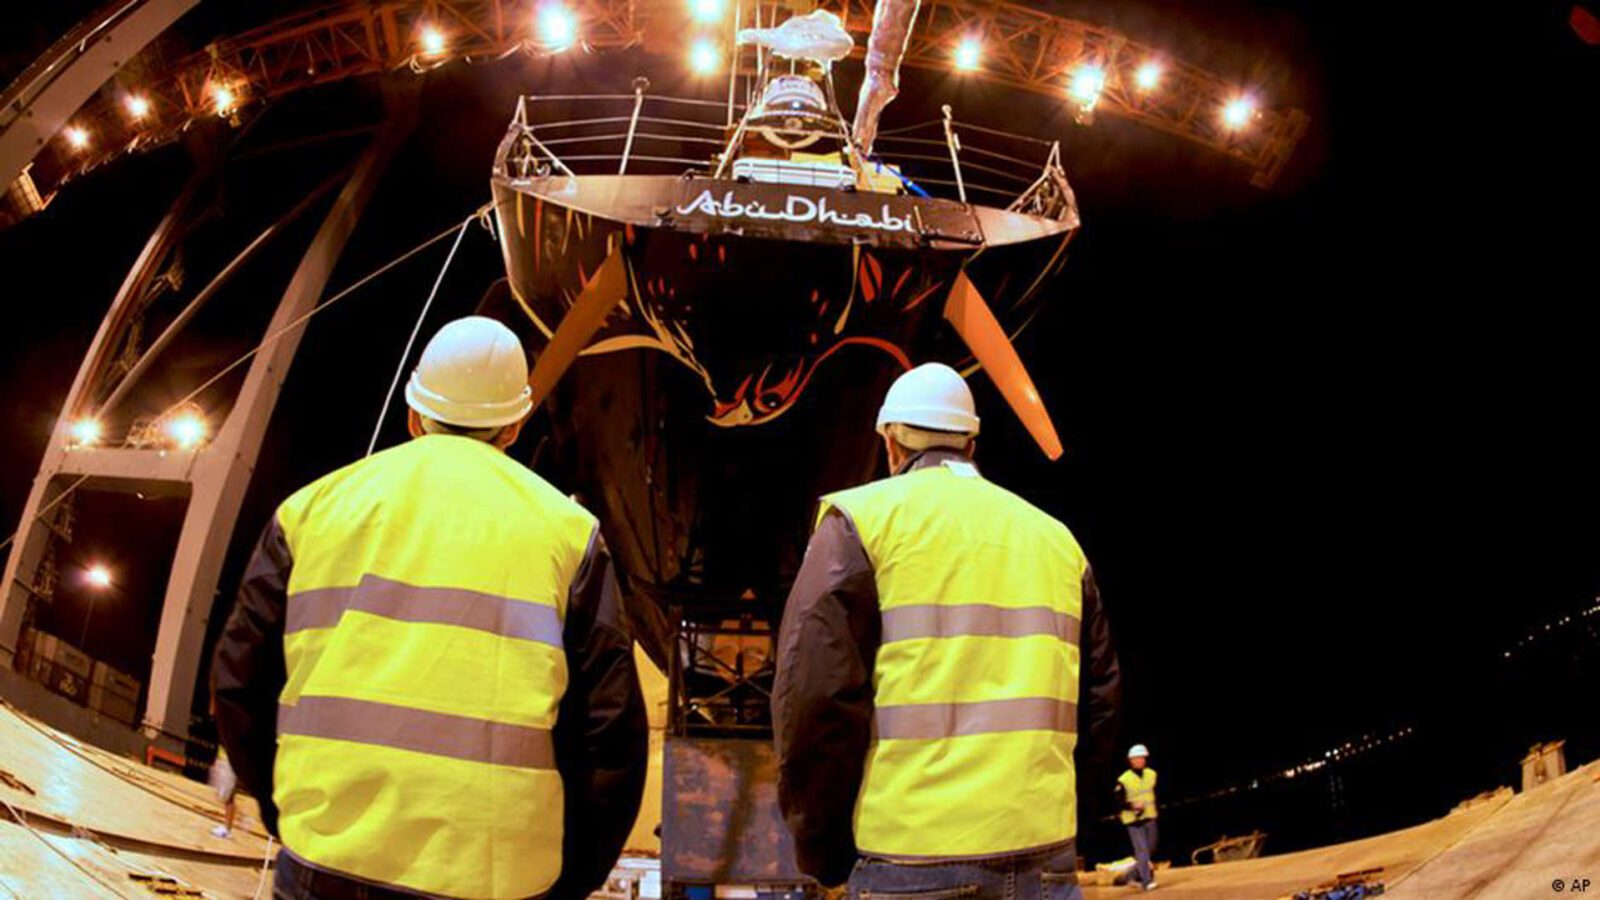 Angola: JLo supports start of warship construction